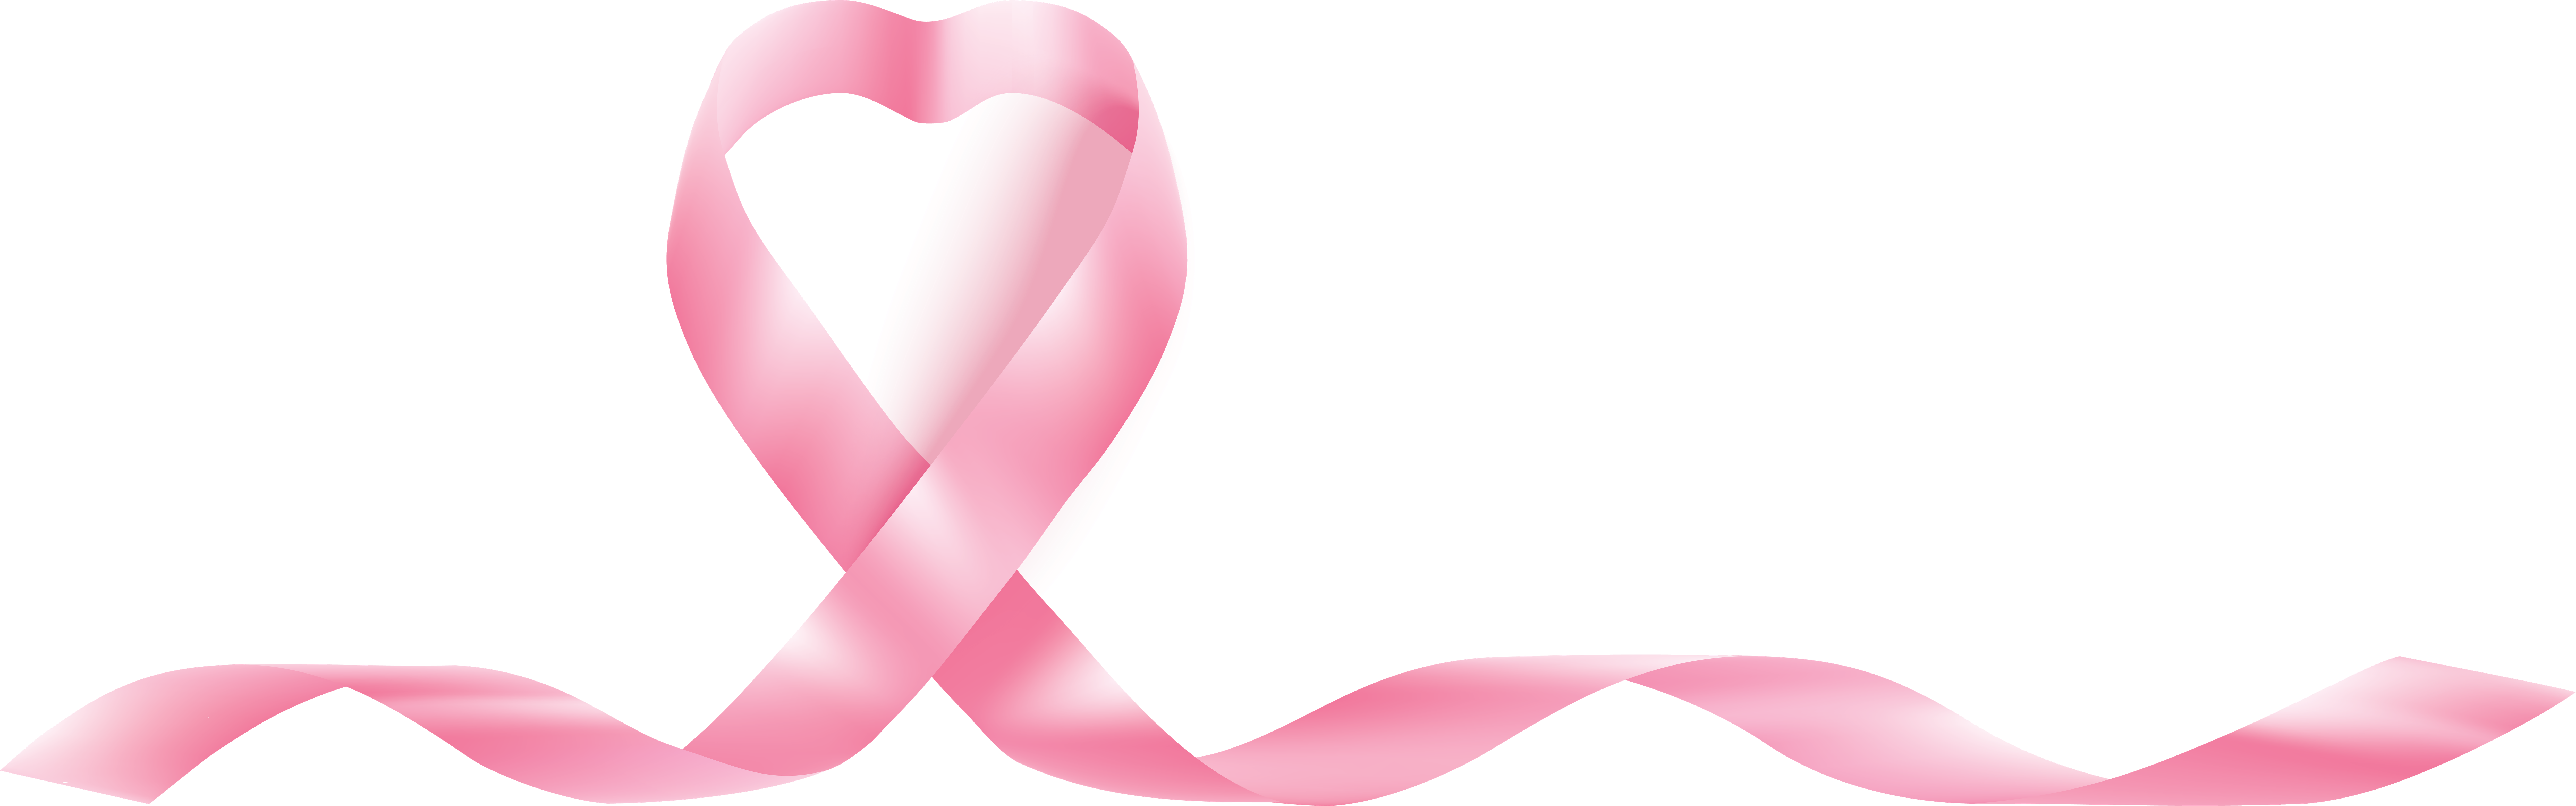 Saint Barnabas Medical Center Celebrates Breast Cancer Awareness Month